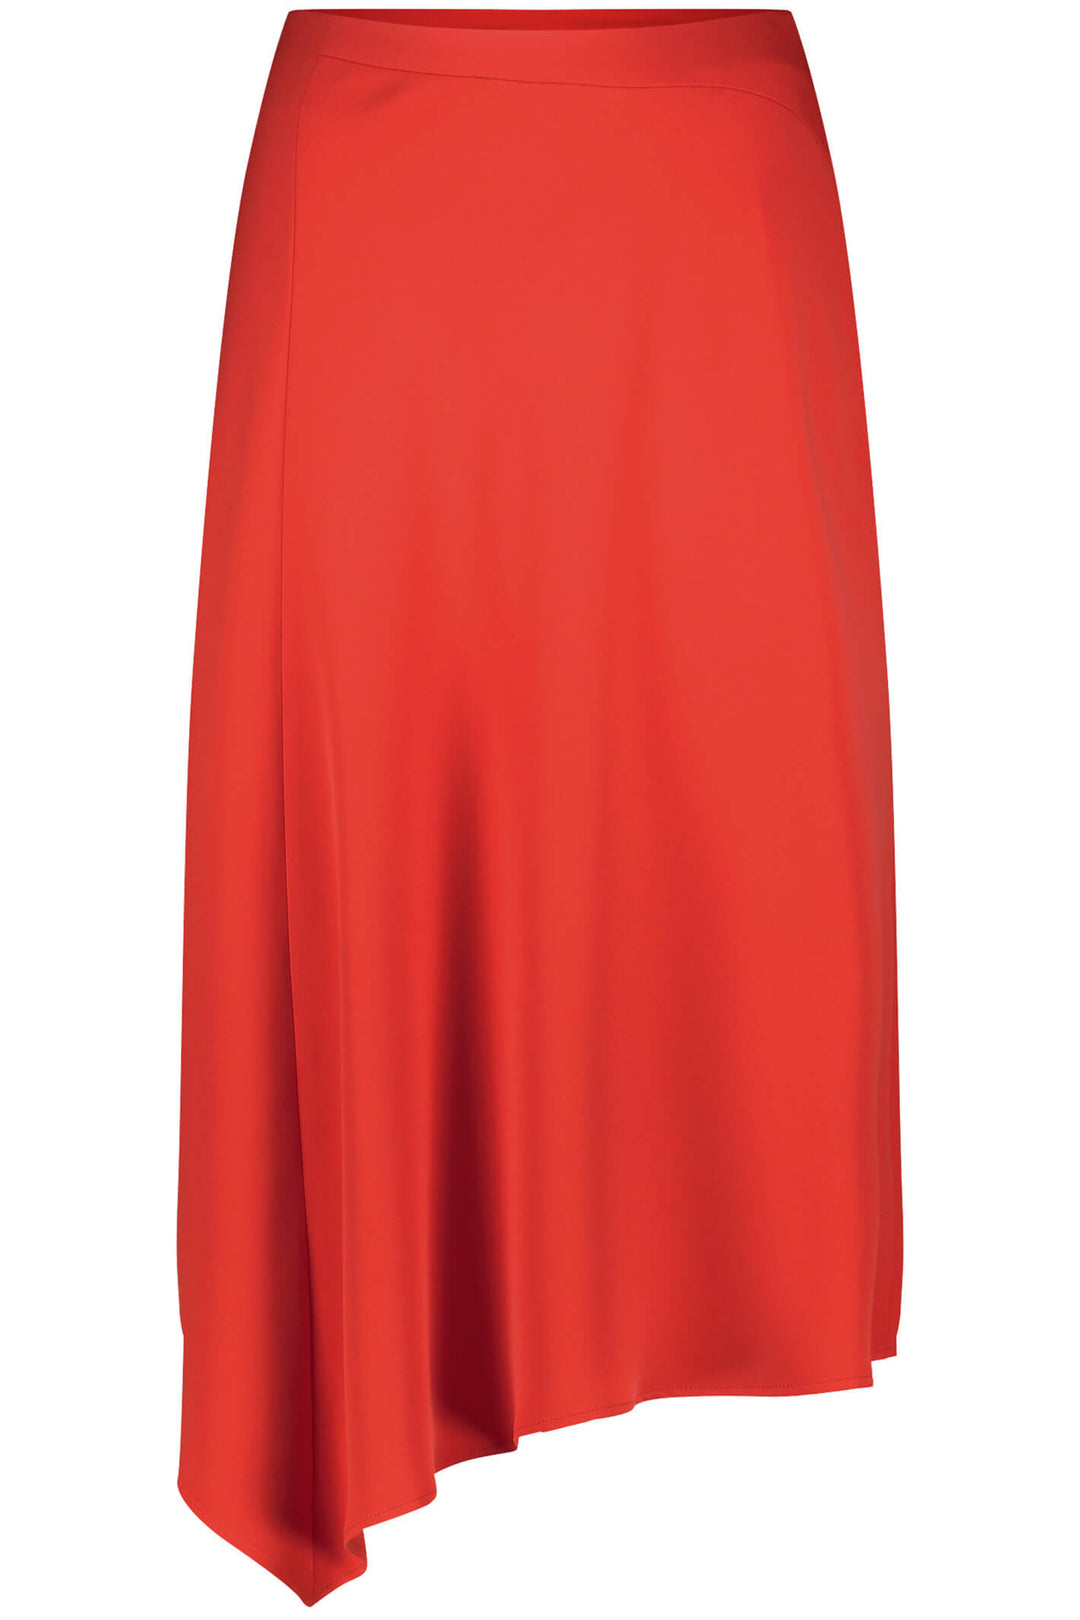 Gerry Weber 110012 Fire Red Asymmetric Skirt - Experience Boutique